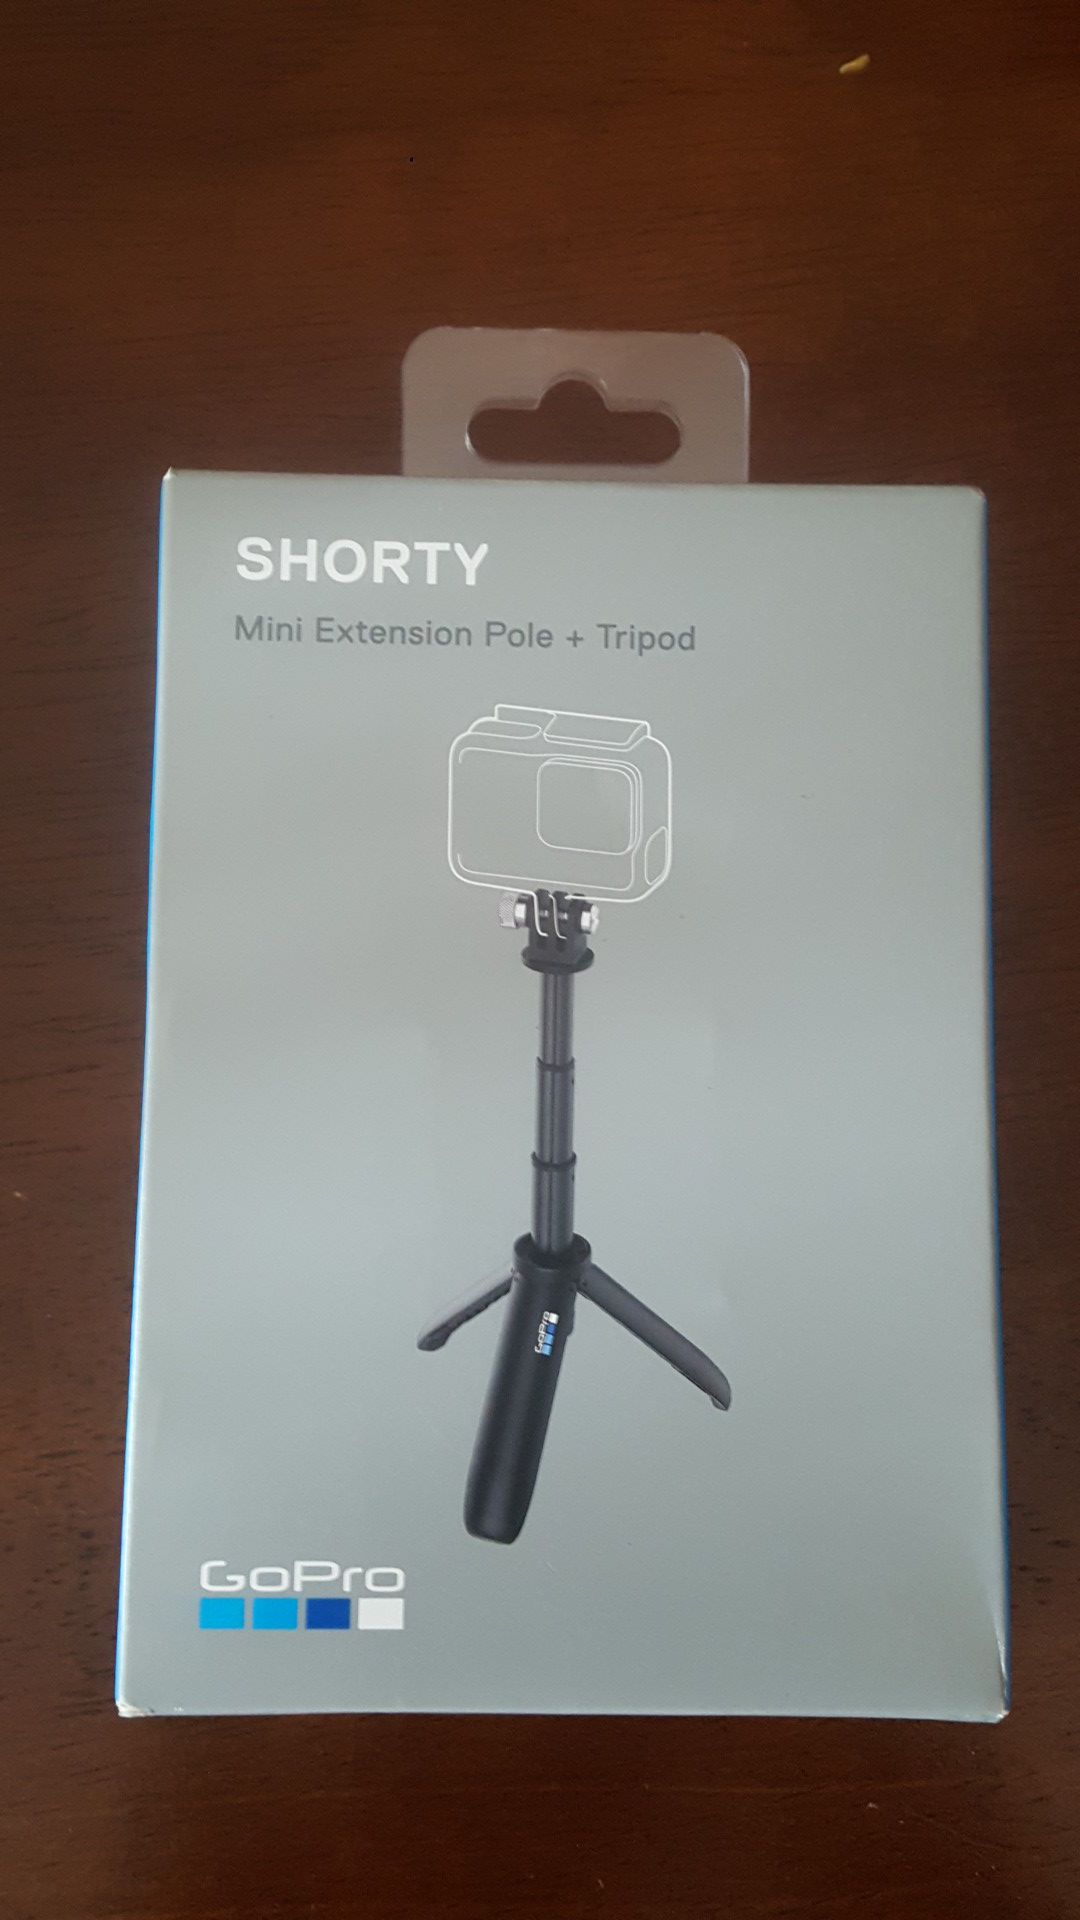 GoPro shorty mini extension pole + tripod